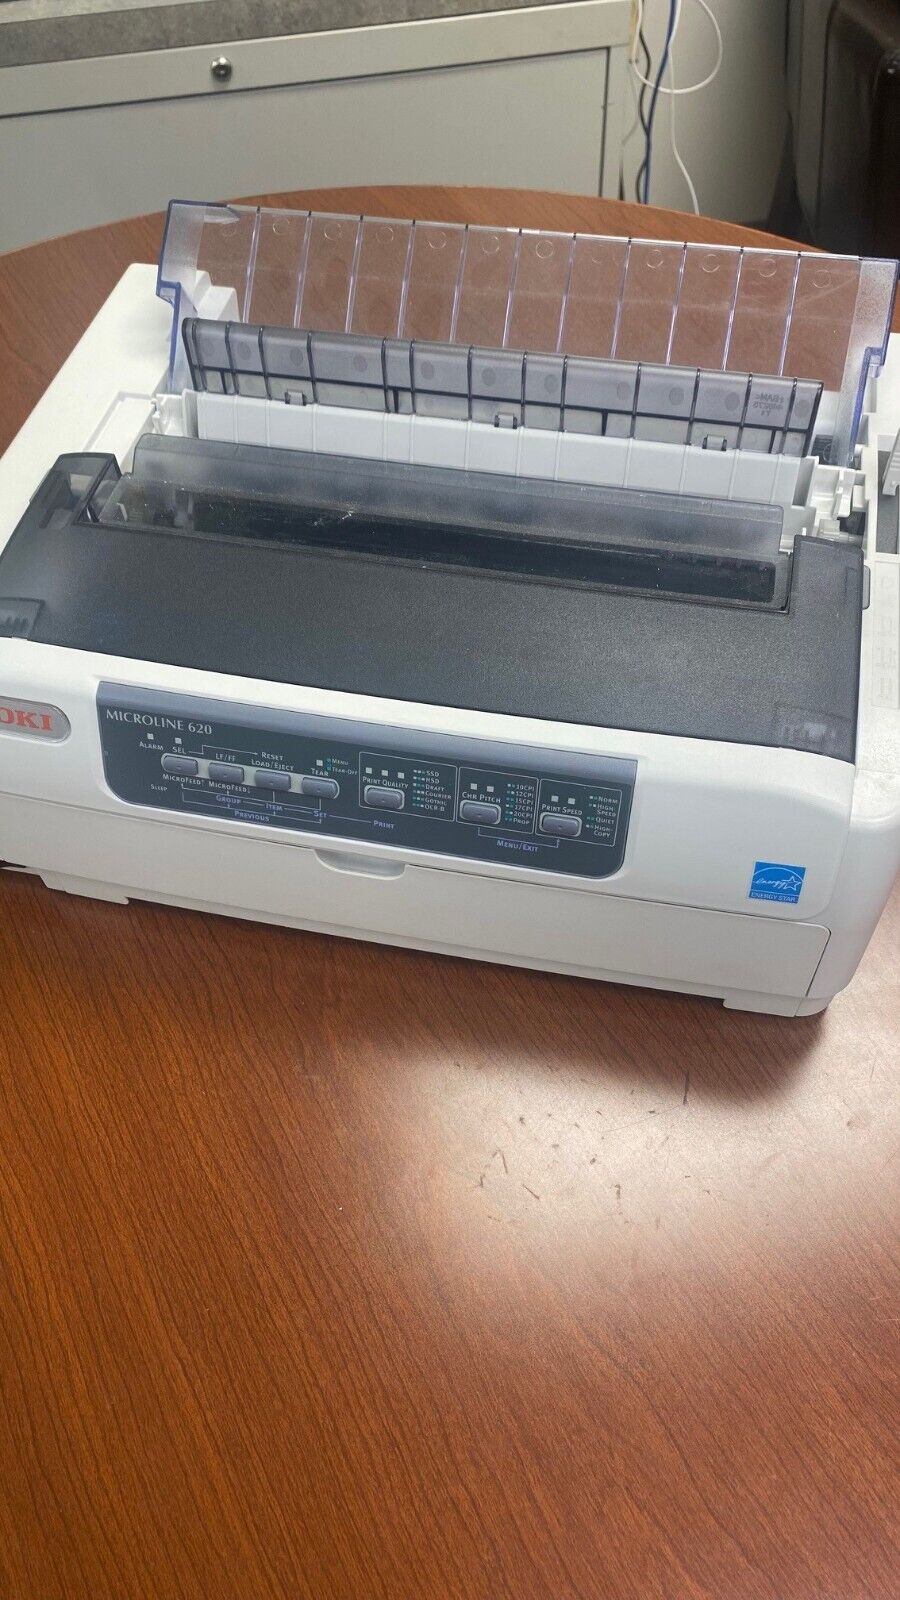 OKI Microline 620 - 9 Pin Dot Matrix Printer